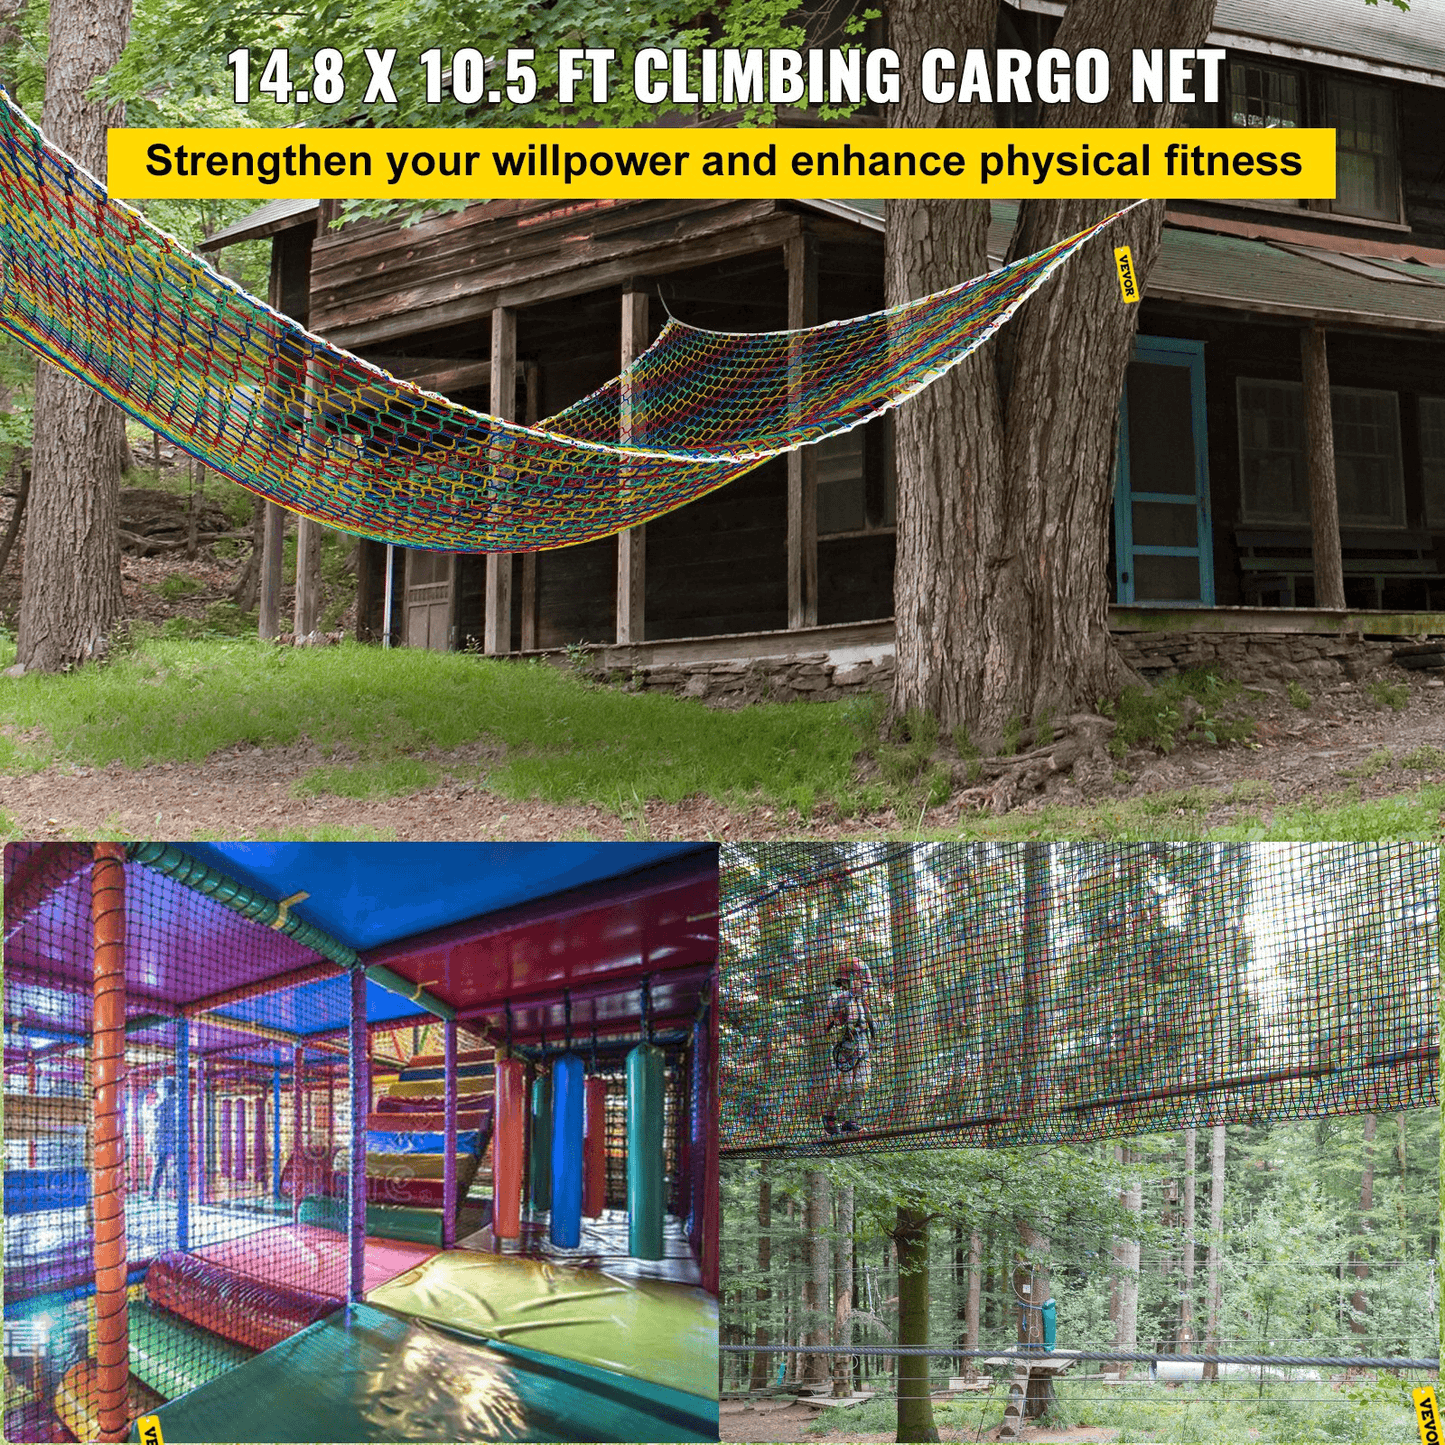 VEVOR Climbing Cargo Net, 14.8 x 10.5 ft Playground Climbing Cargo Net, Polyester Double Layers Cargo Net Climbing Outdoor w/500lbs Weight Capacity, Rope Bridge Net for Tree House, Monkey Bar, Rainbow - Loomini